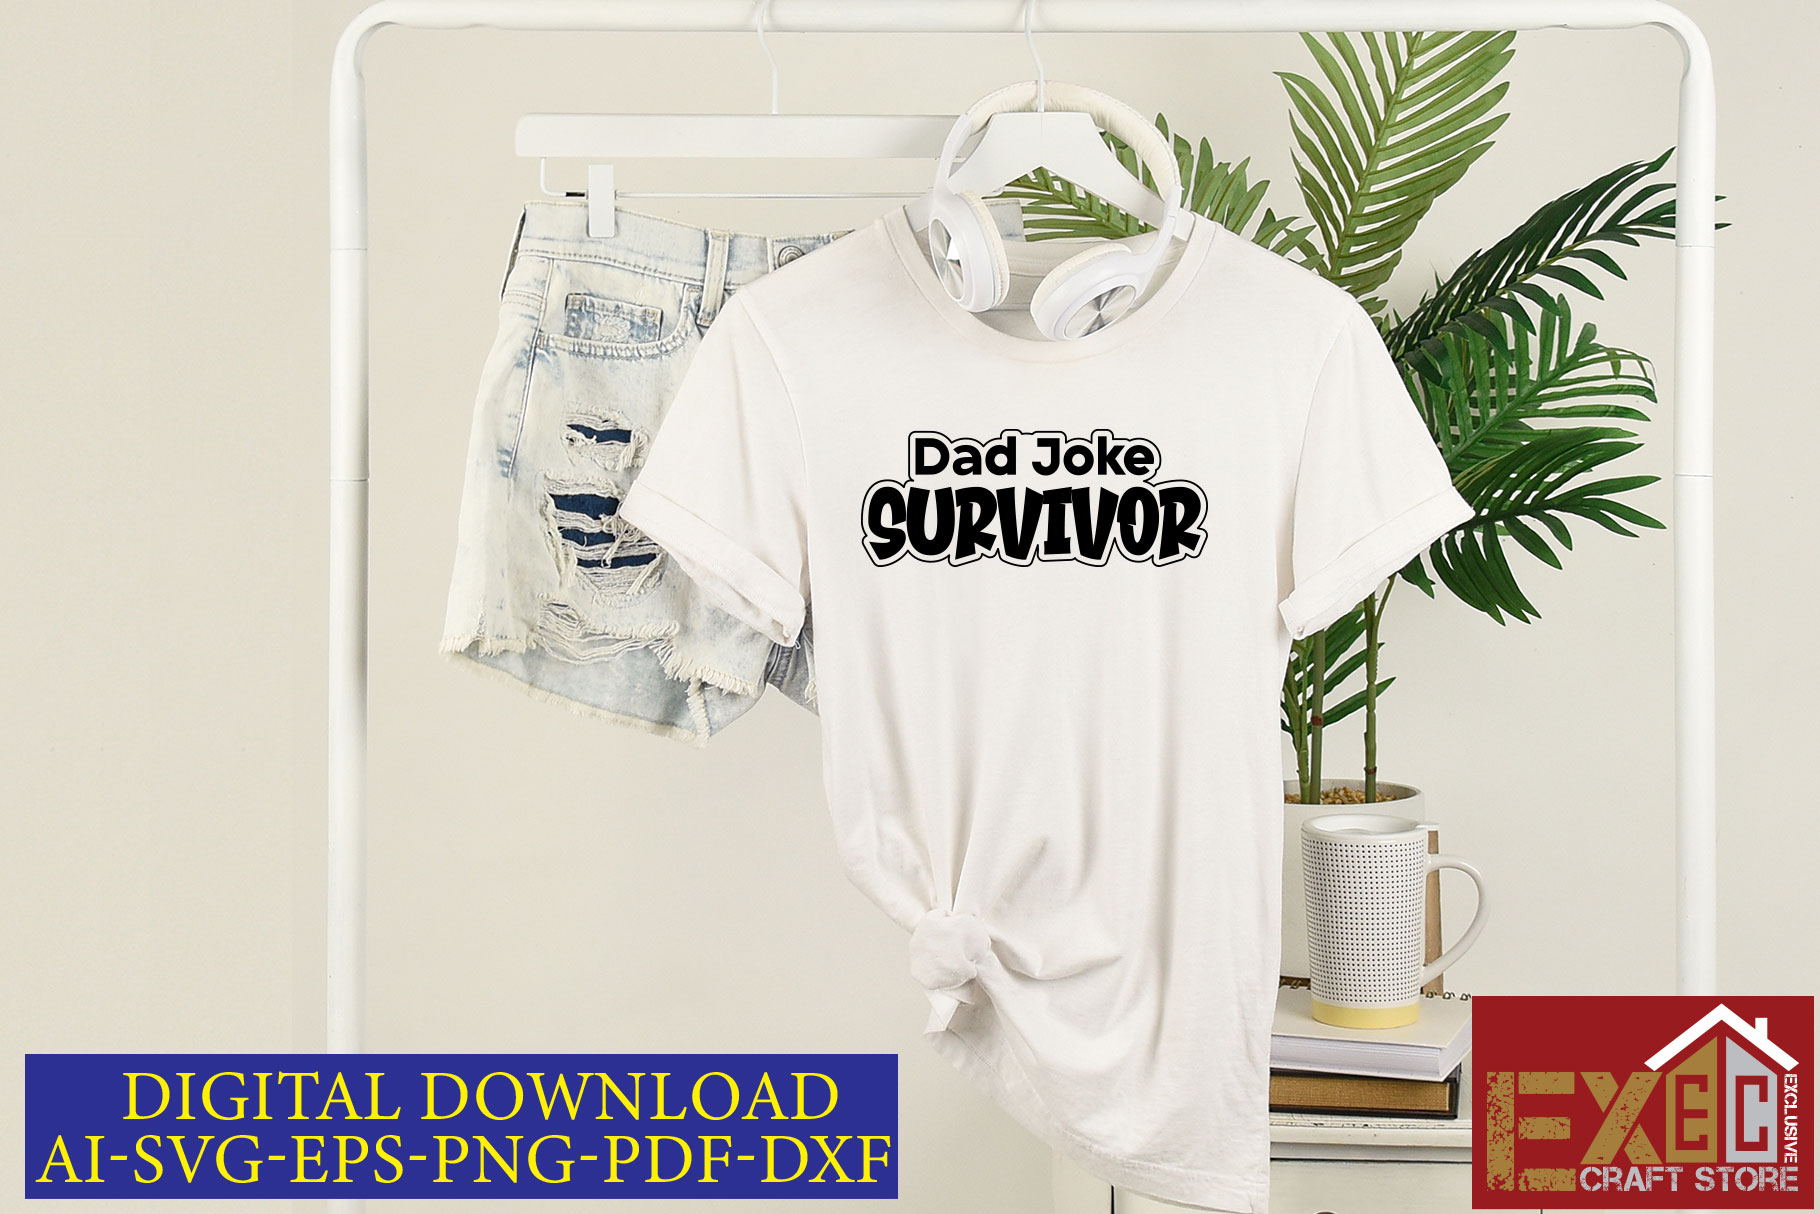 dad joke survivor 2 397